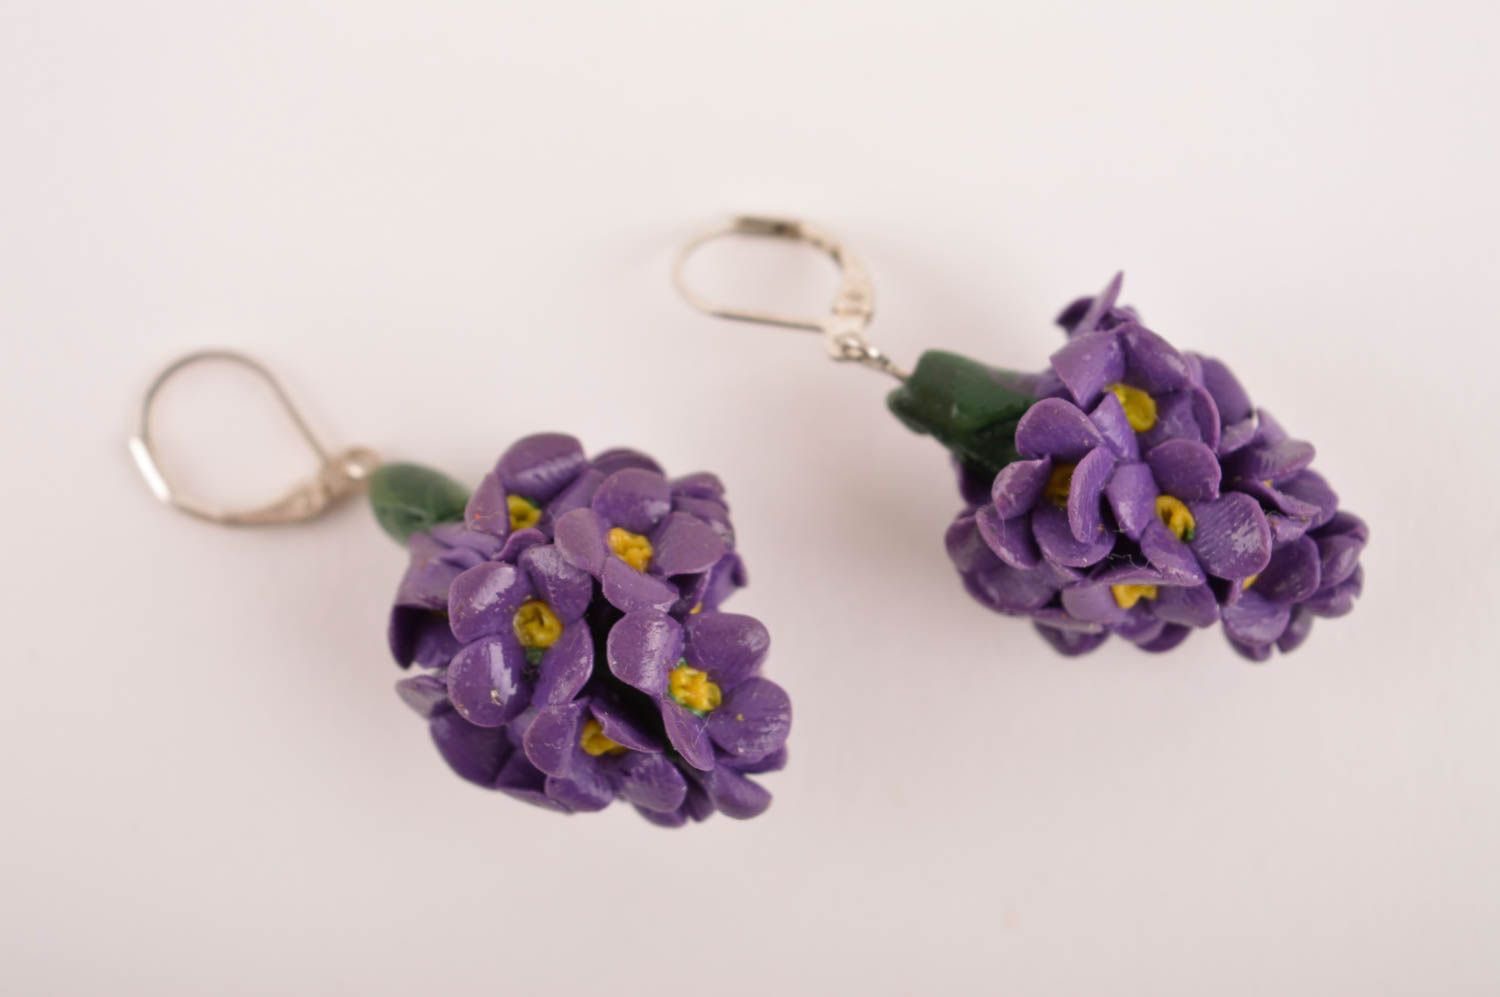 Handmade earrings designer accessory unusual gift for women clay jewelry photo 4